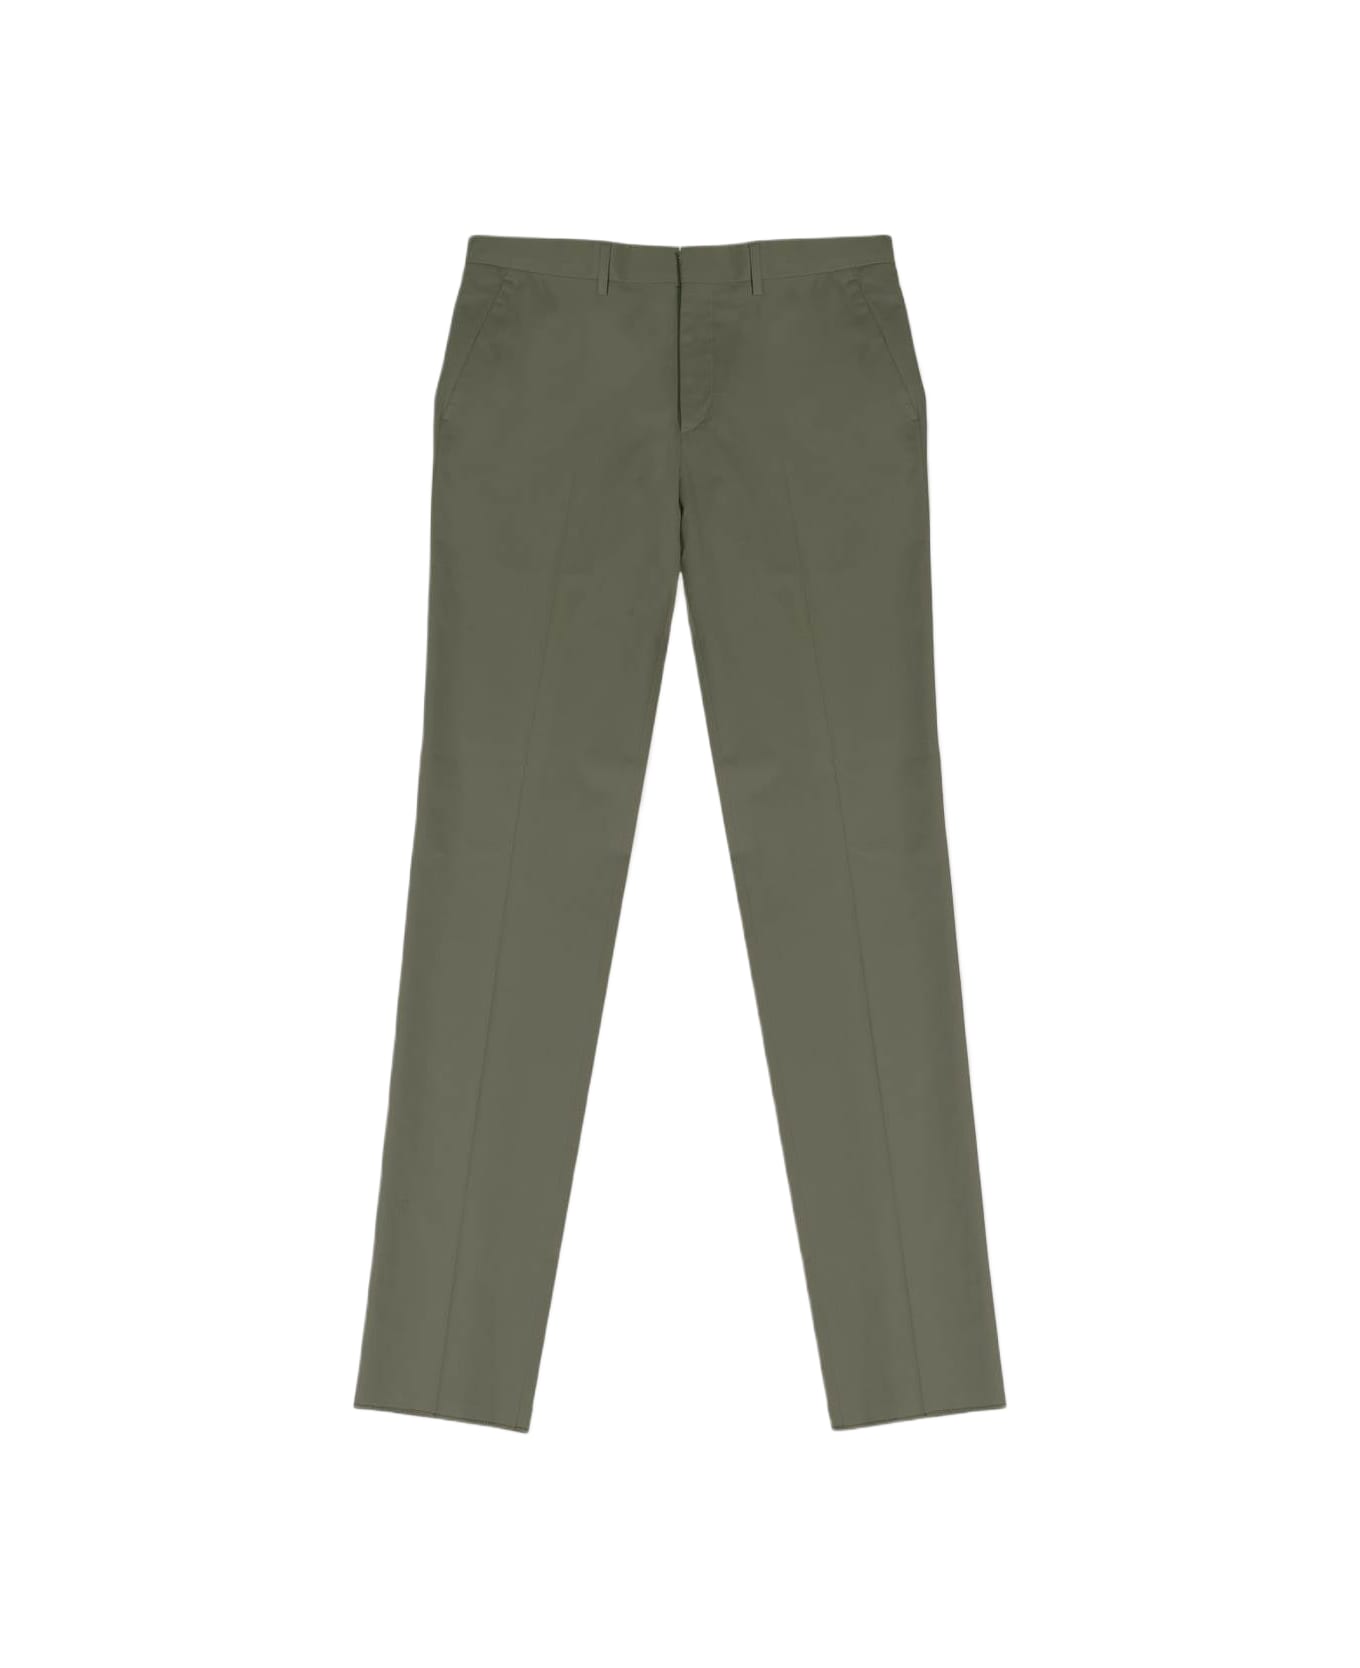 Larusmiani Chino Sport Trousers Pants - Olive